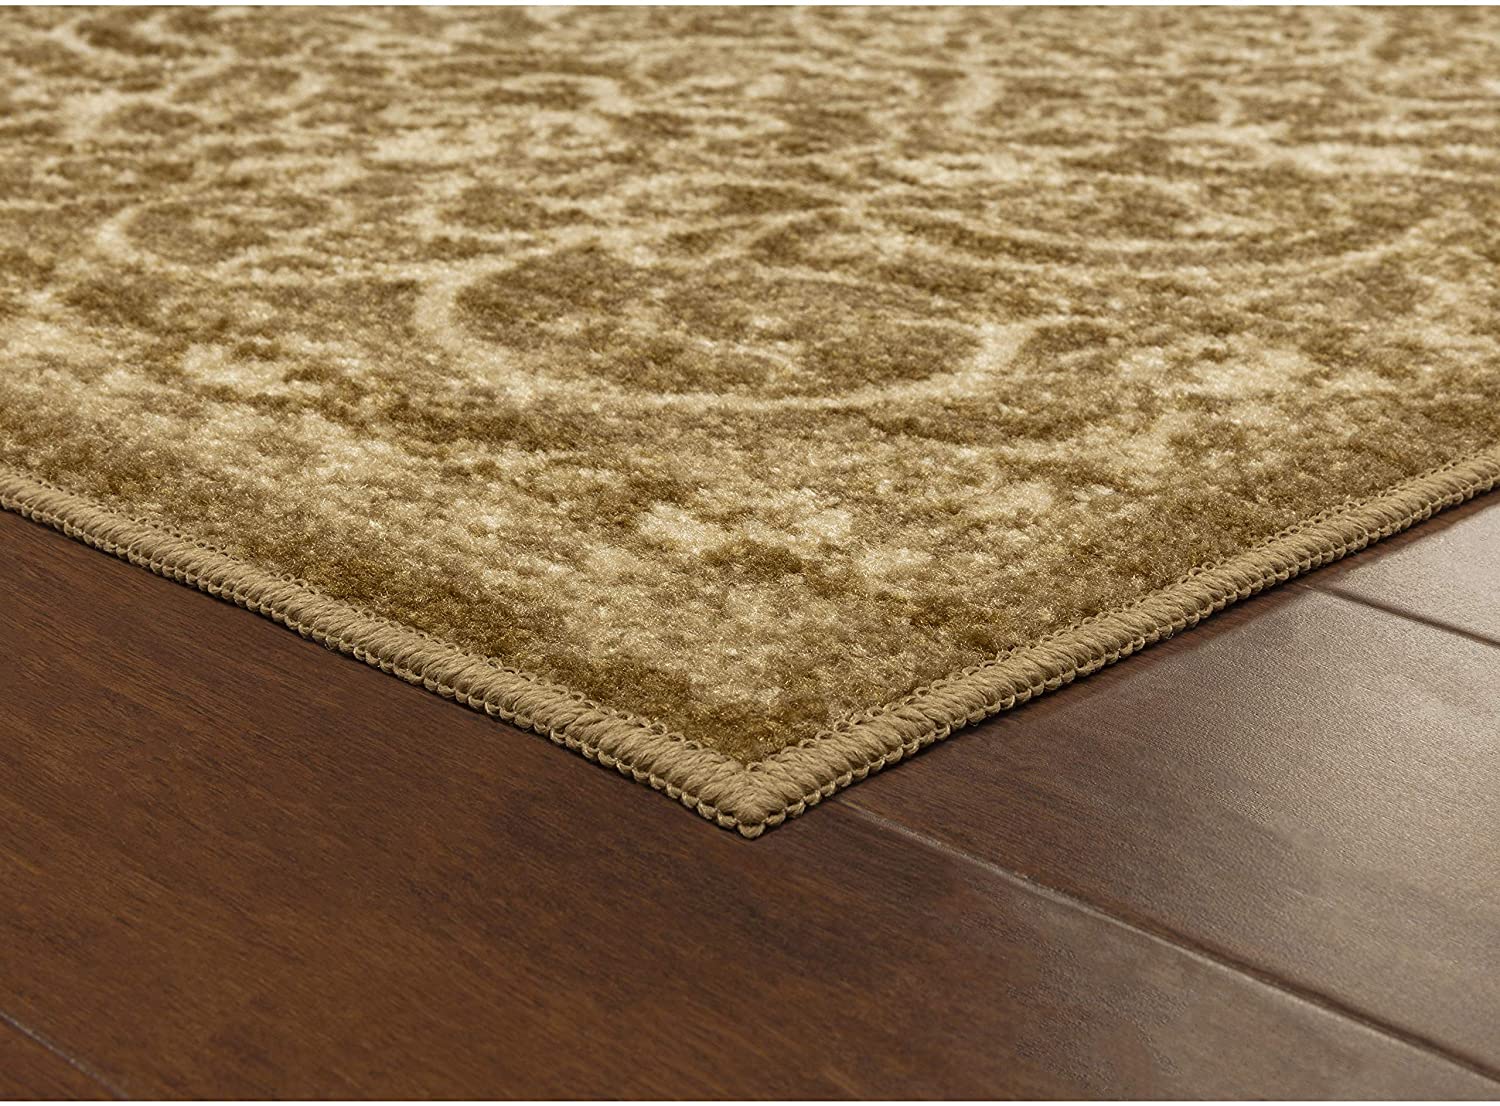 Maples Rugs Pelham Vintage Runner Rug Non Slip Washable Hallway Entry Carpet  [Made in USA], 2 x 6, Grey/Blue